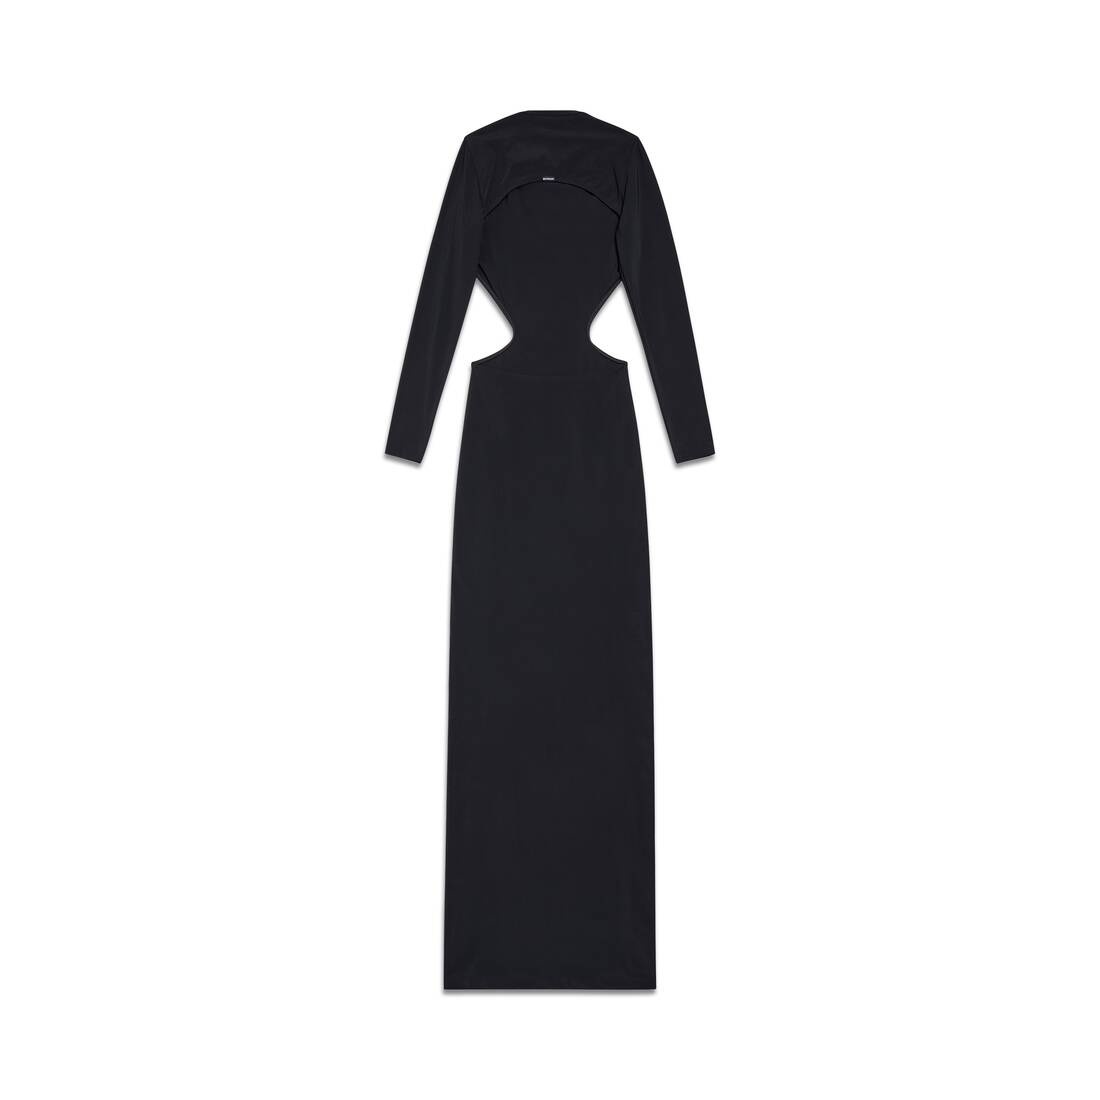 Women's Cut-out Maxi Dress in Black - 2